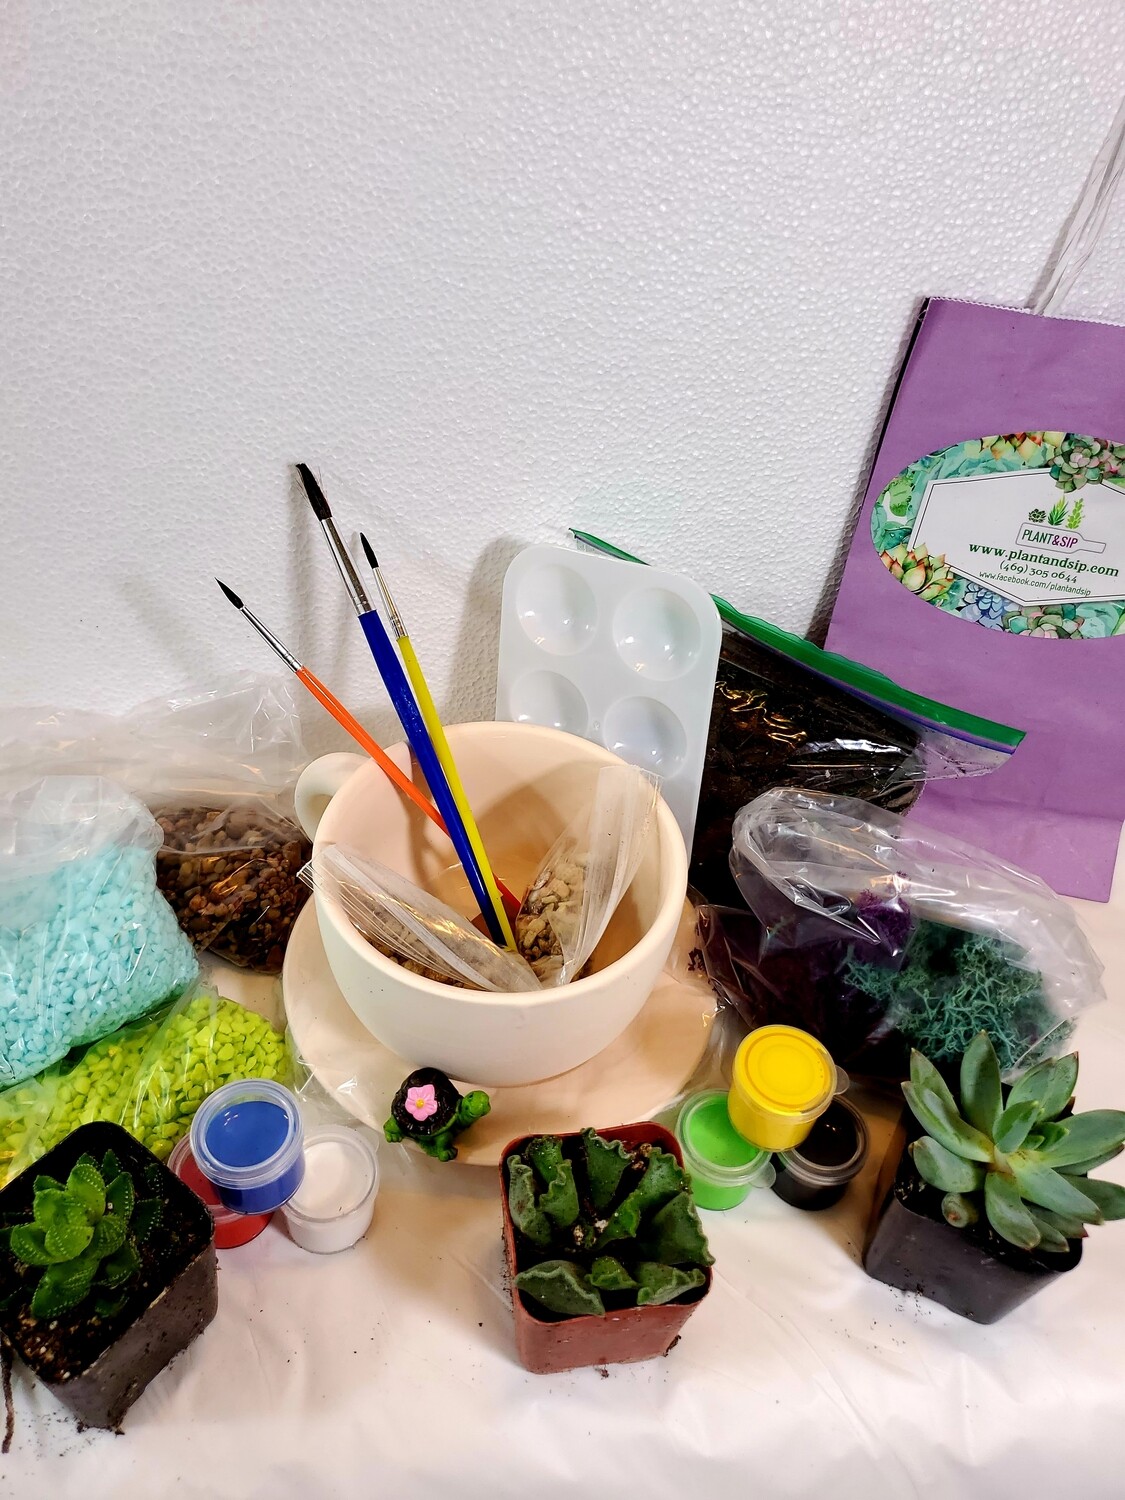 Paint & Plant DIY Ceramic Kits to Go!